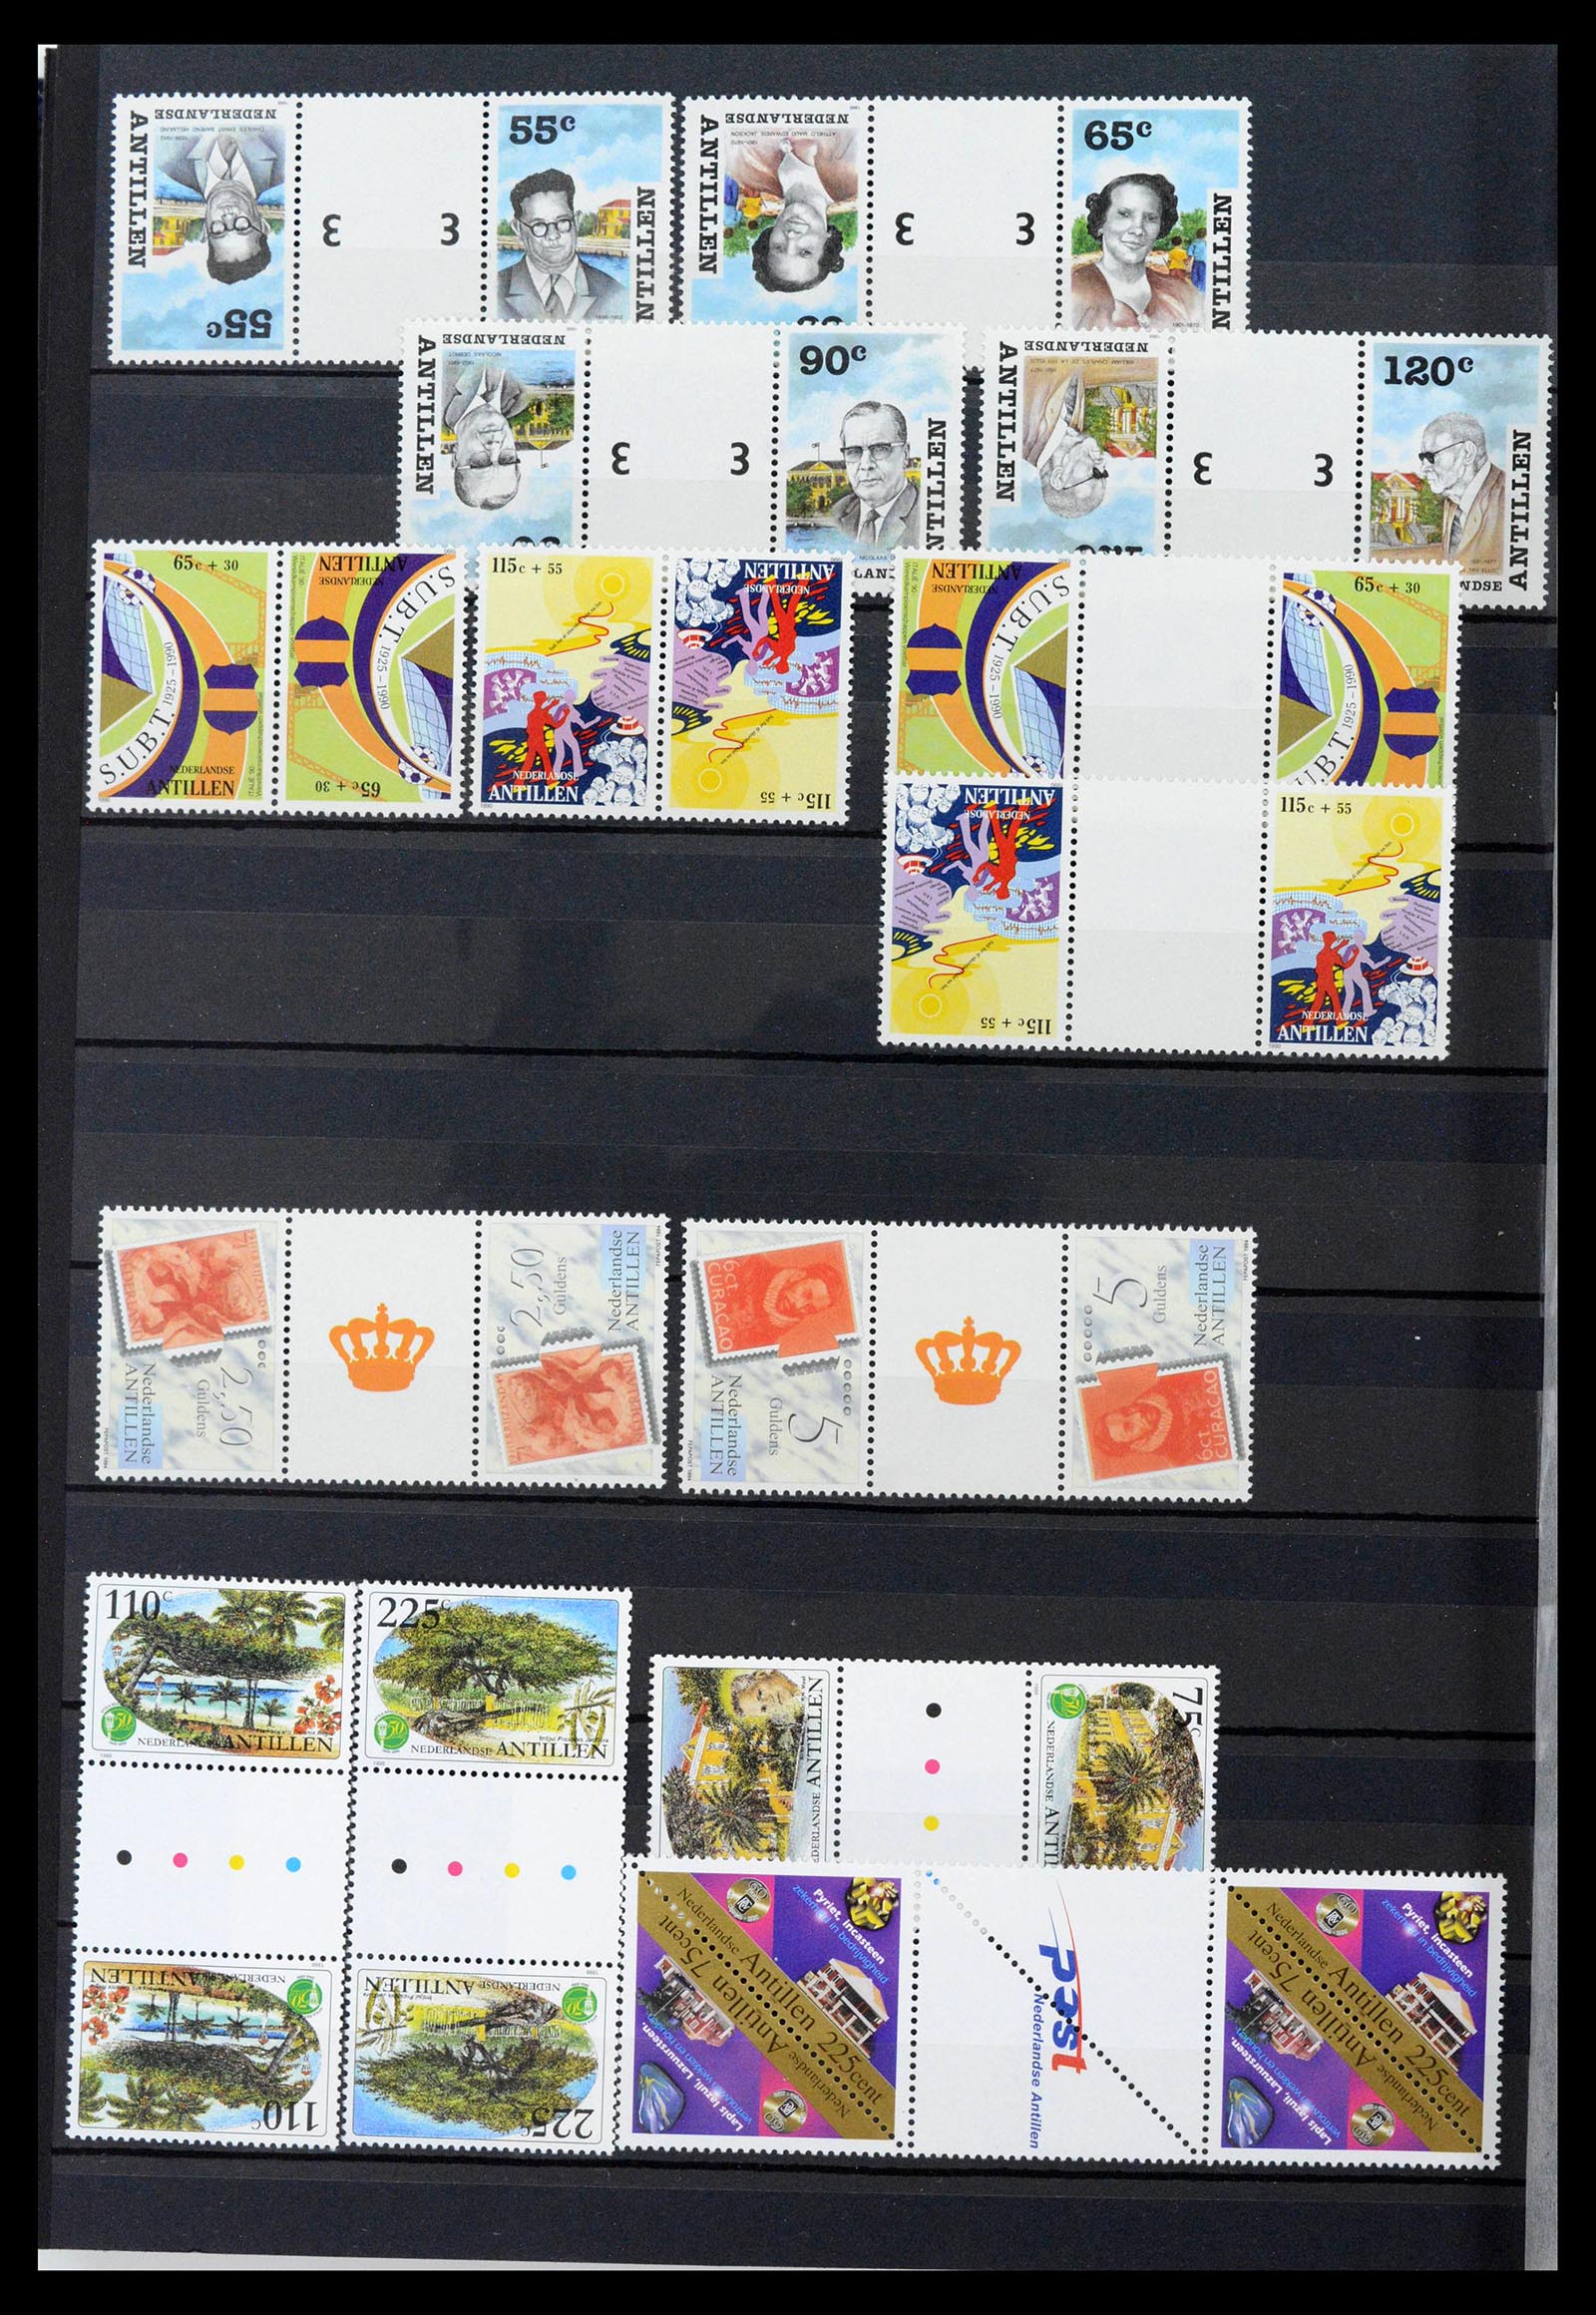 39027 0062 - Stamp collection 39027 Curaçao/Antilles/Aruba 1873-2009.